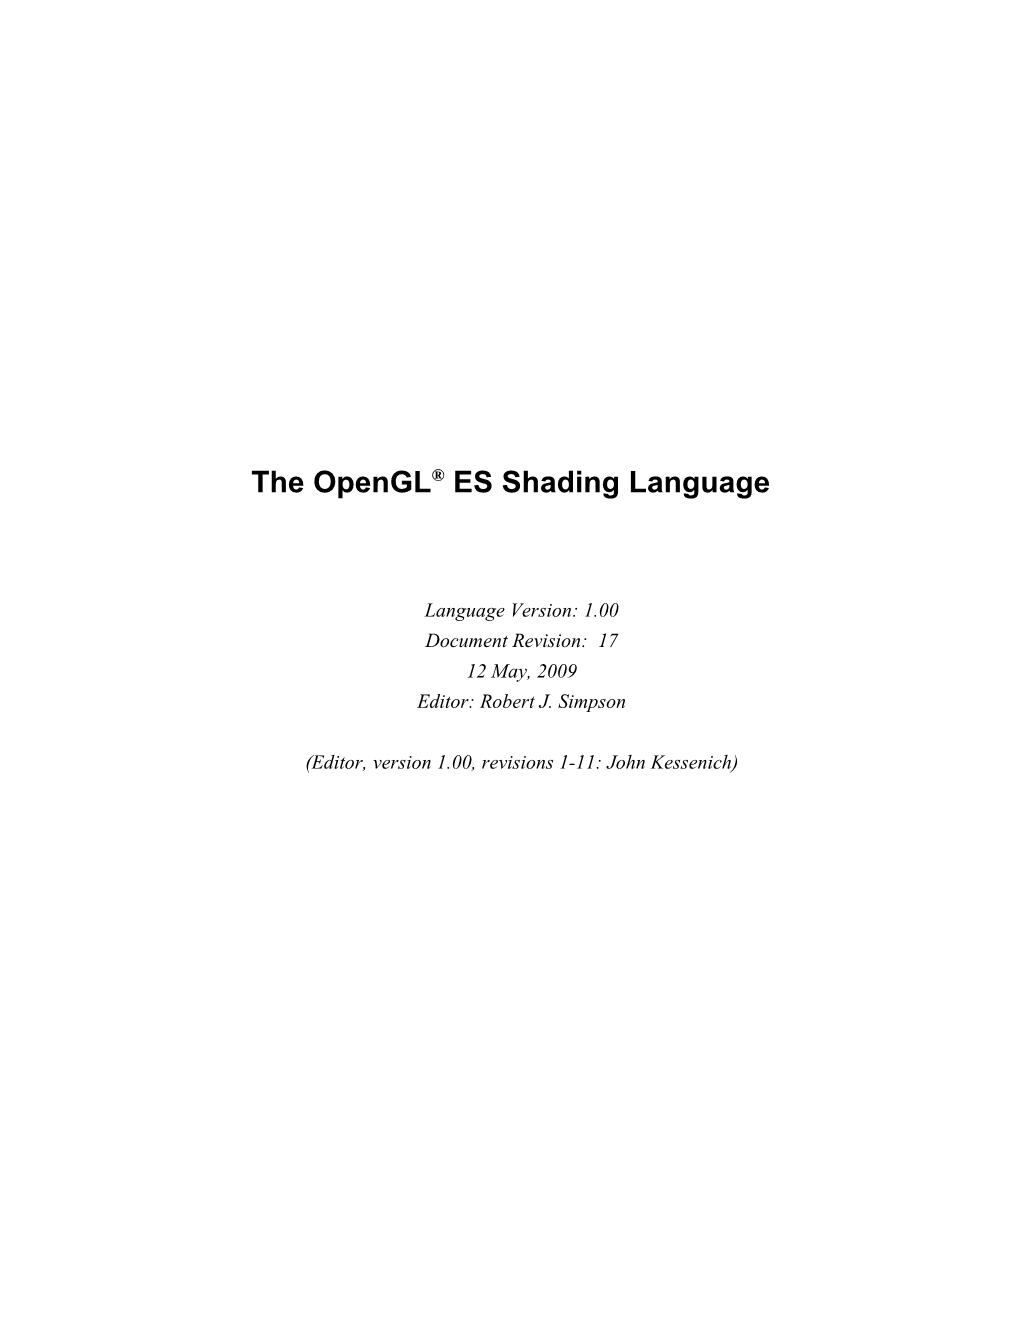 The Opengl® ES Shading Language Version 1.00